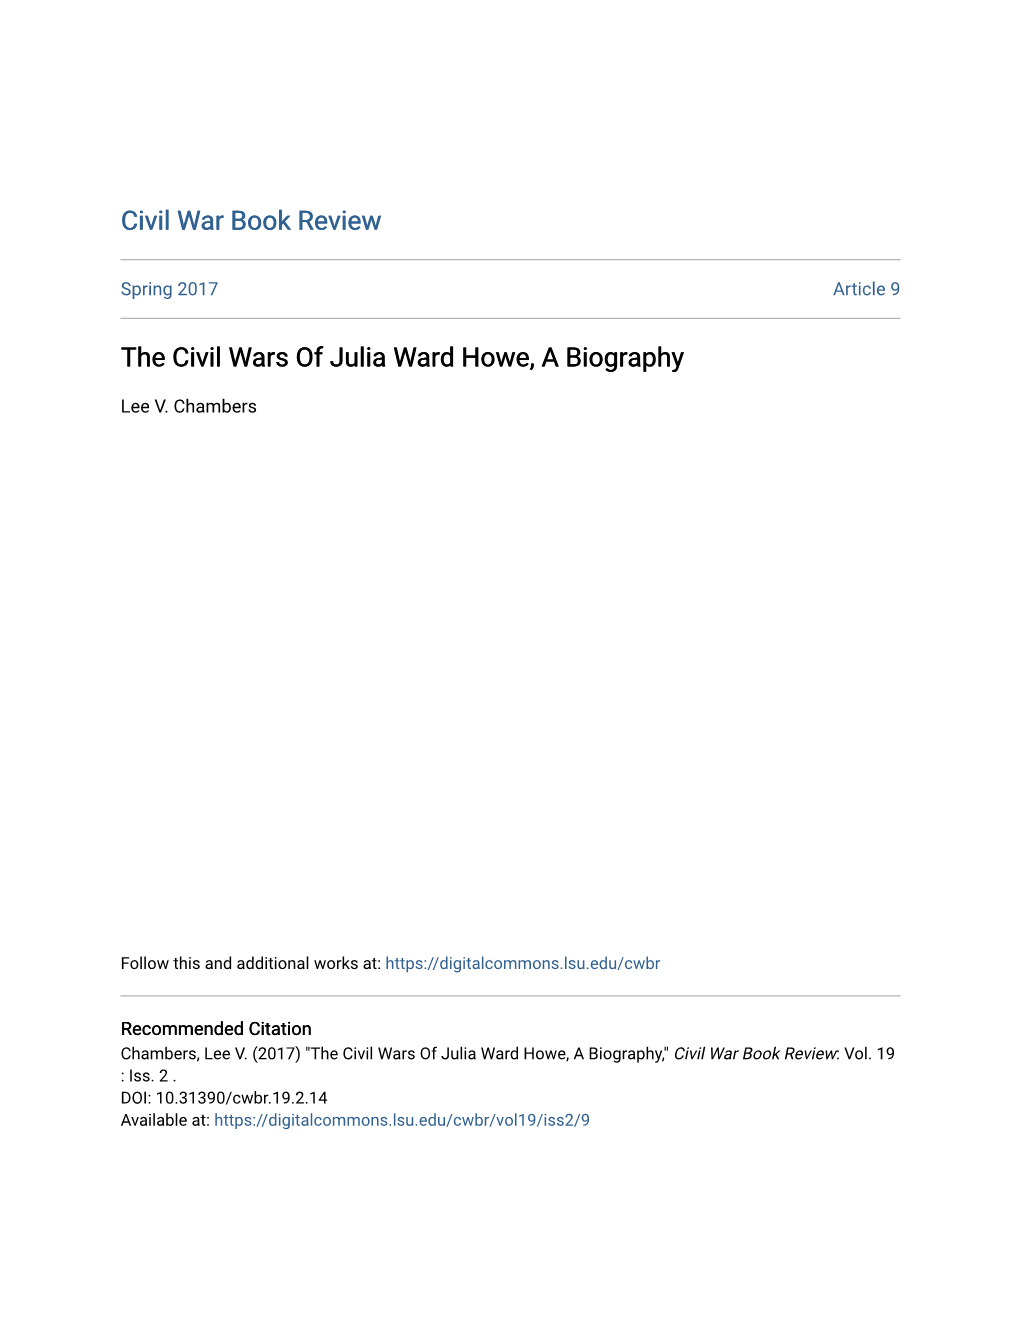 The Civil Wars of Julia Ward Howe, a Biography